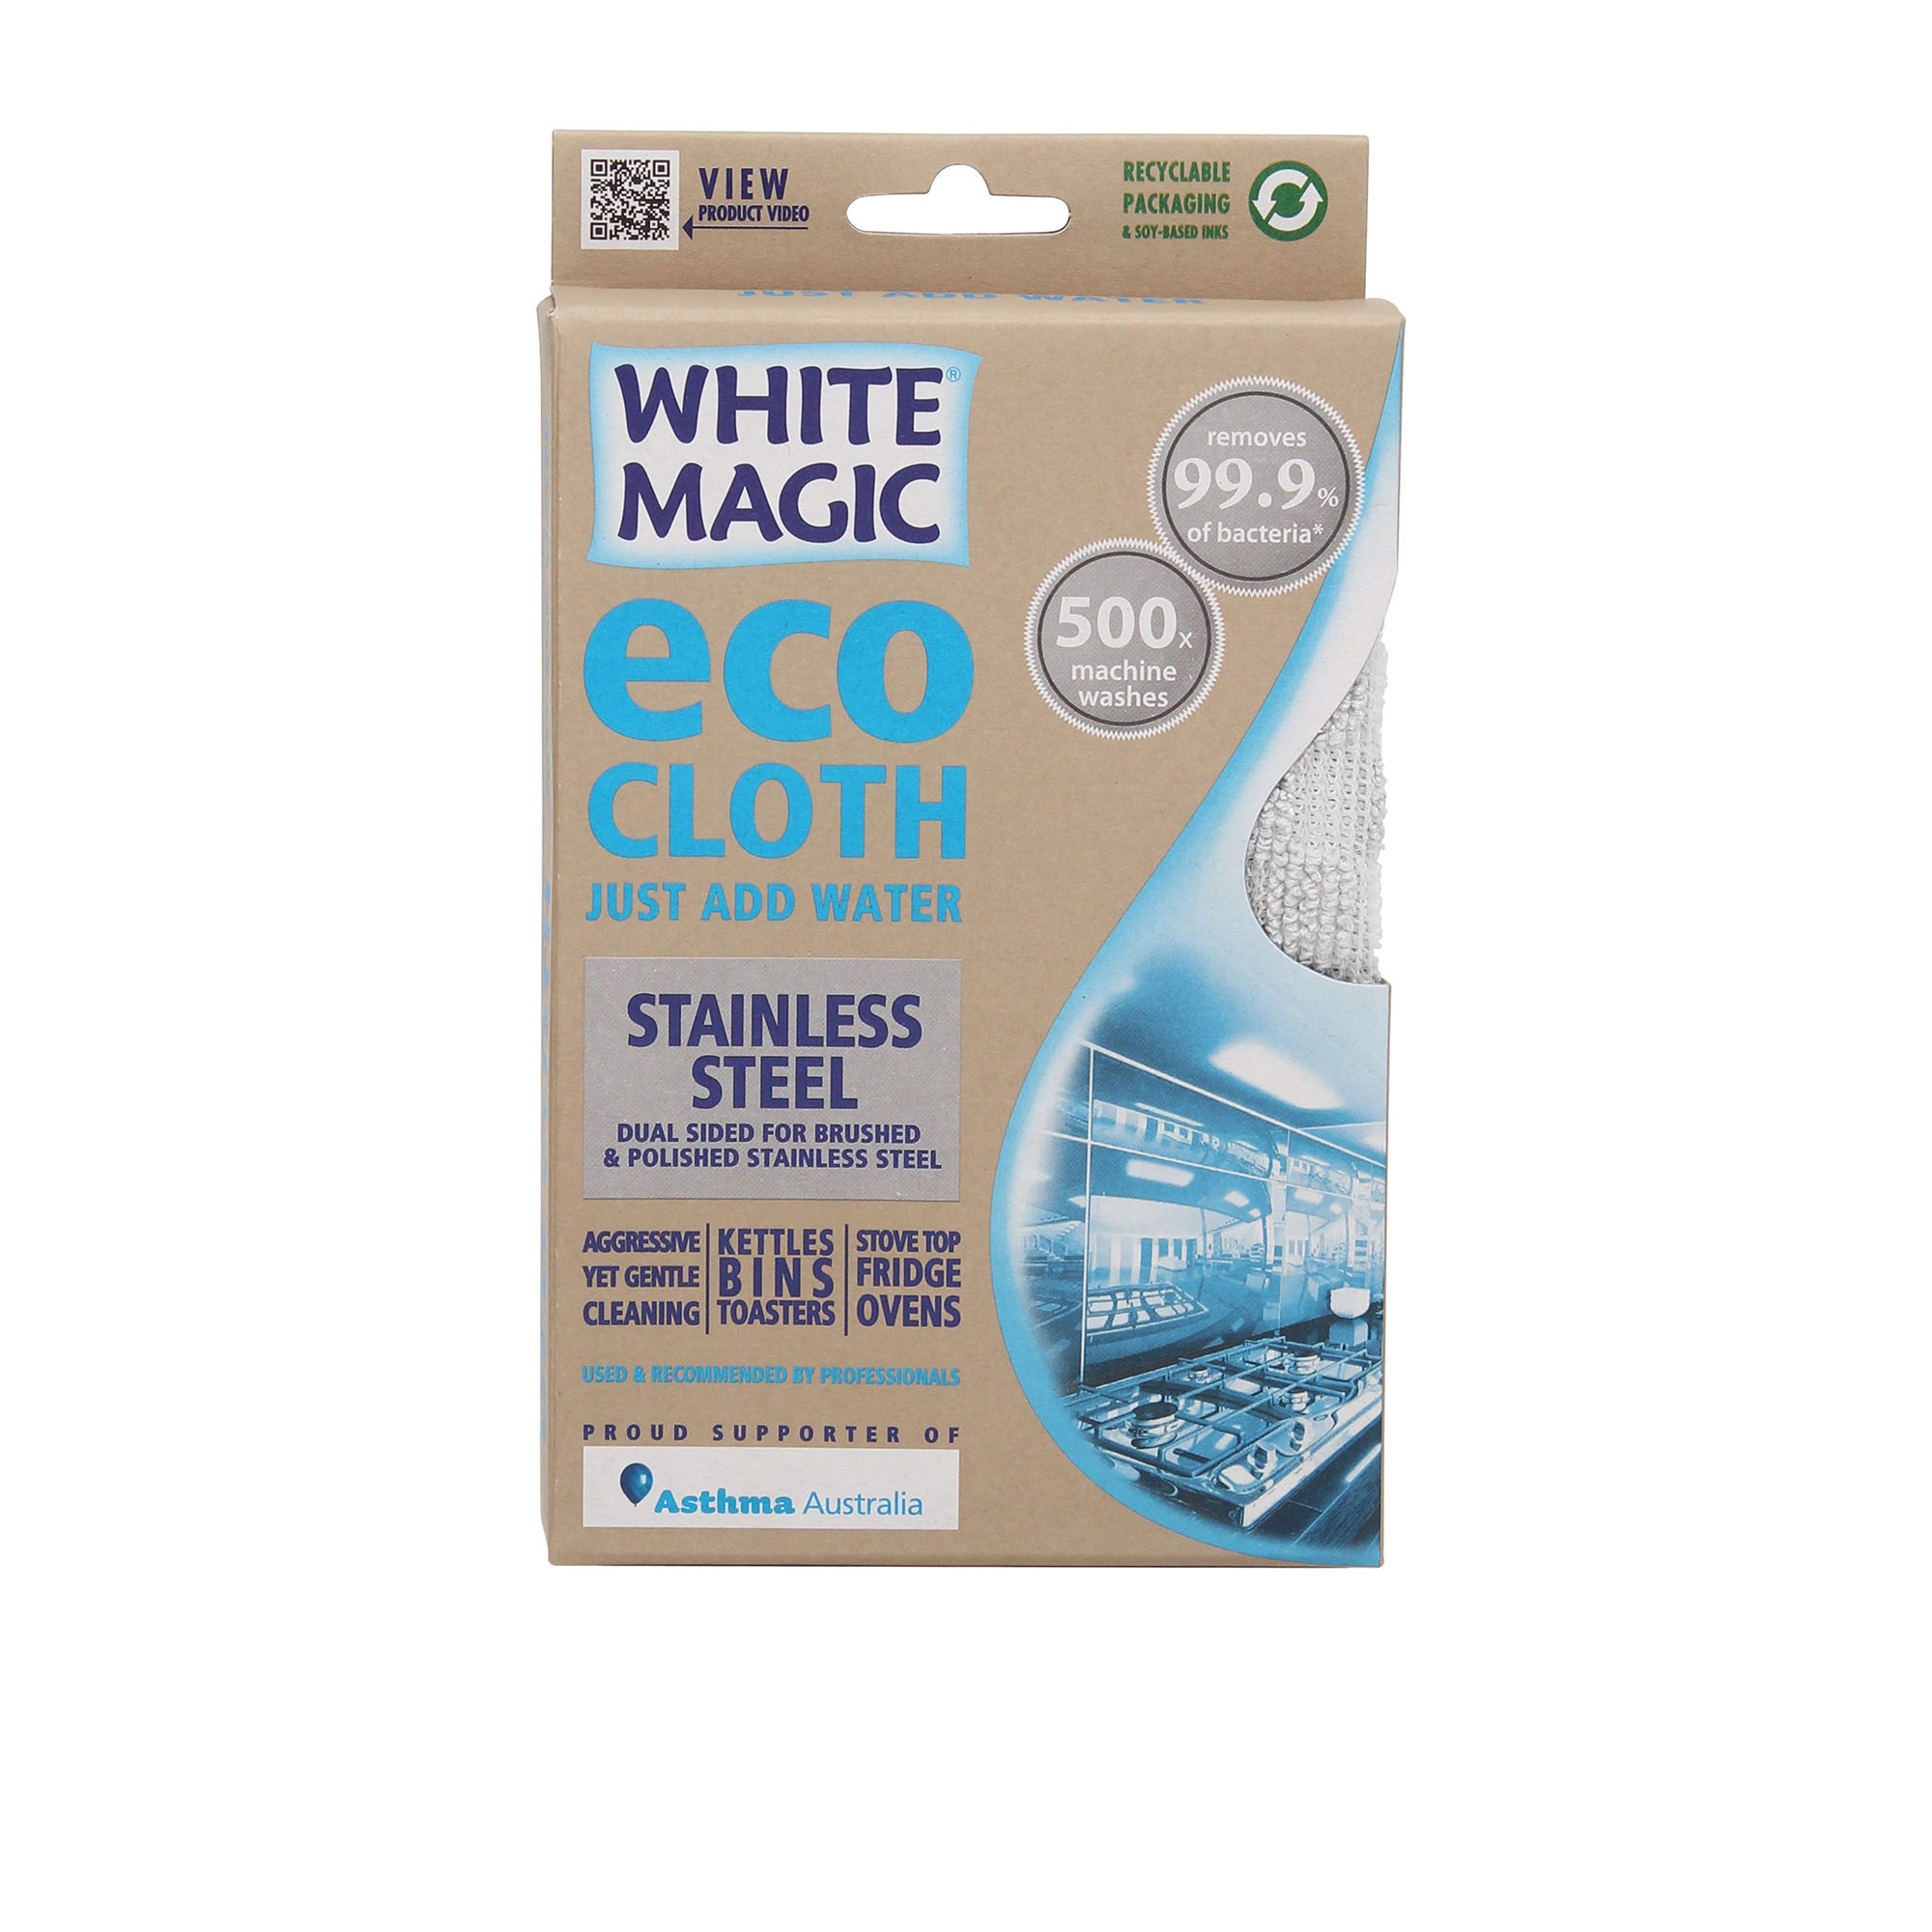 White Magic Microfibre Stainless Steel Eco Cloth